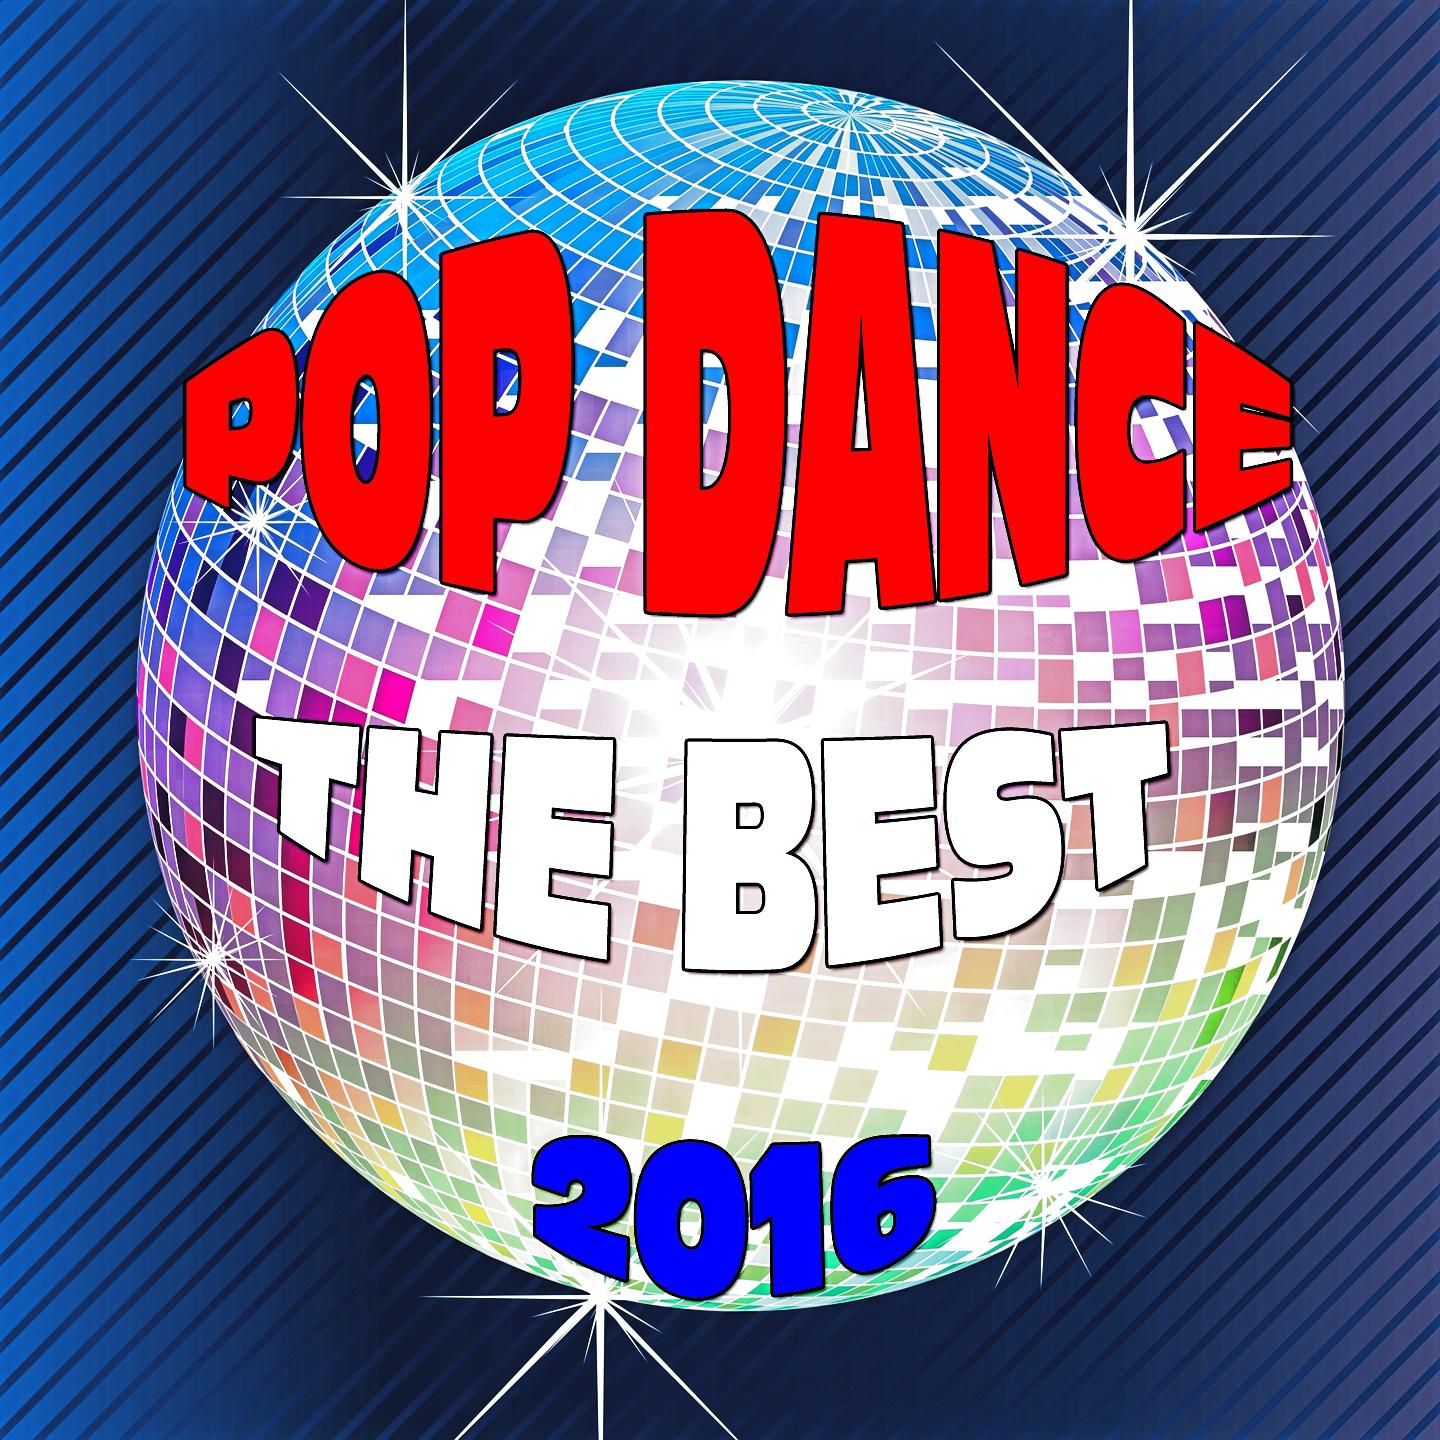 Постер альбома The Best Pop Dance 2016